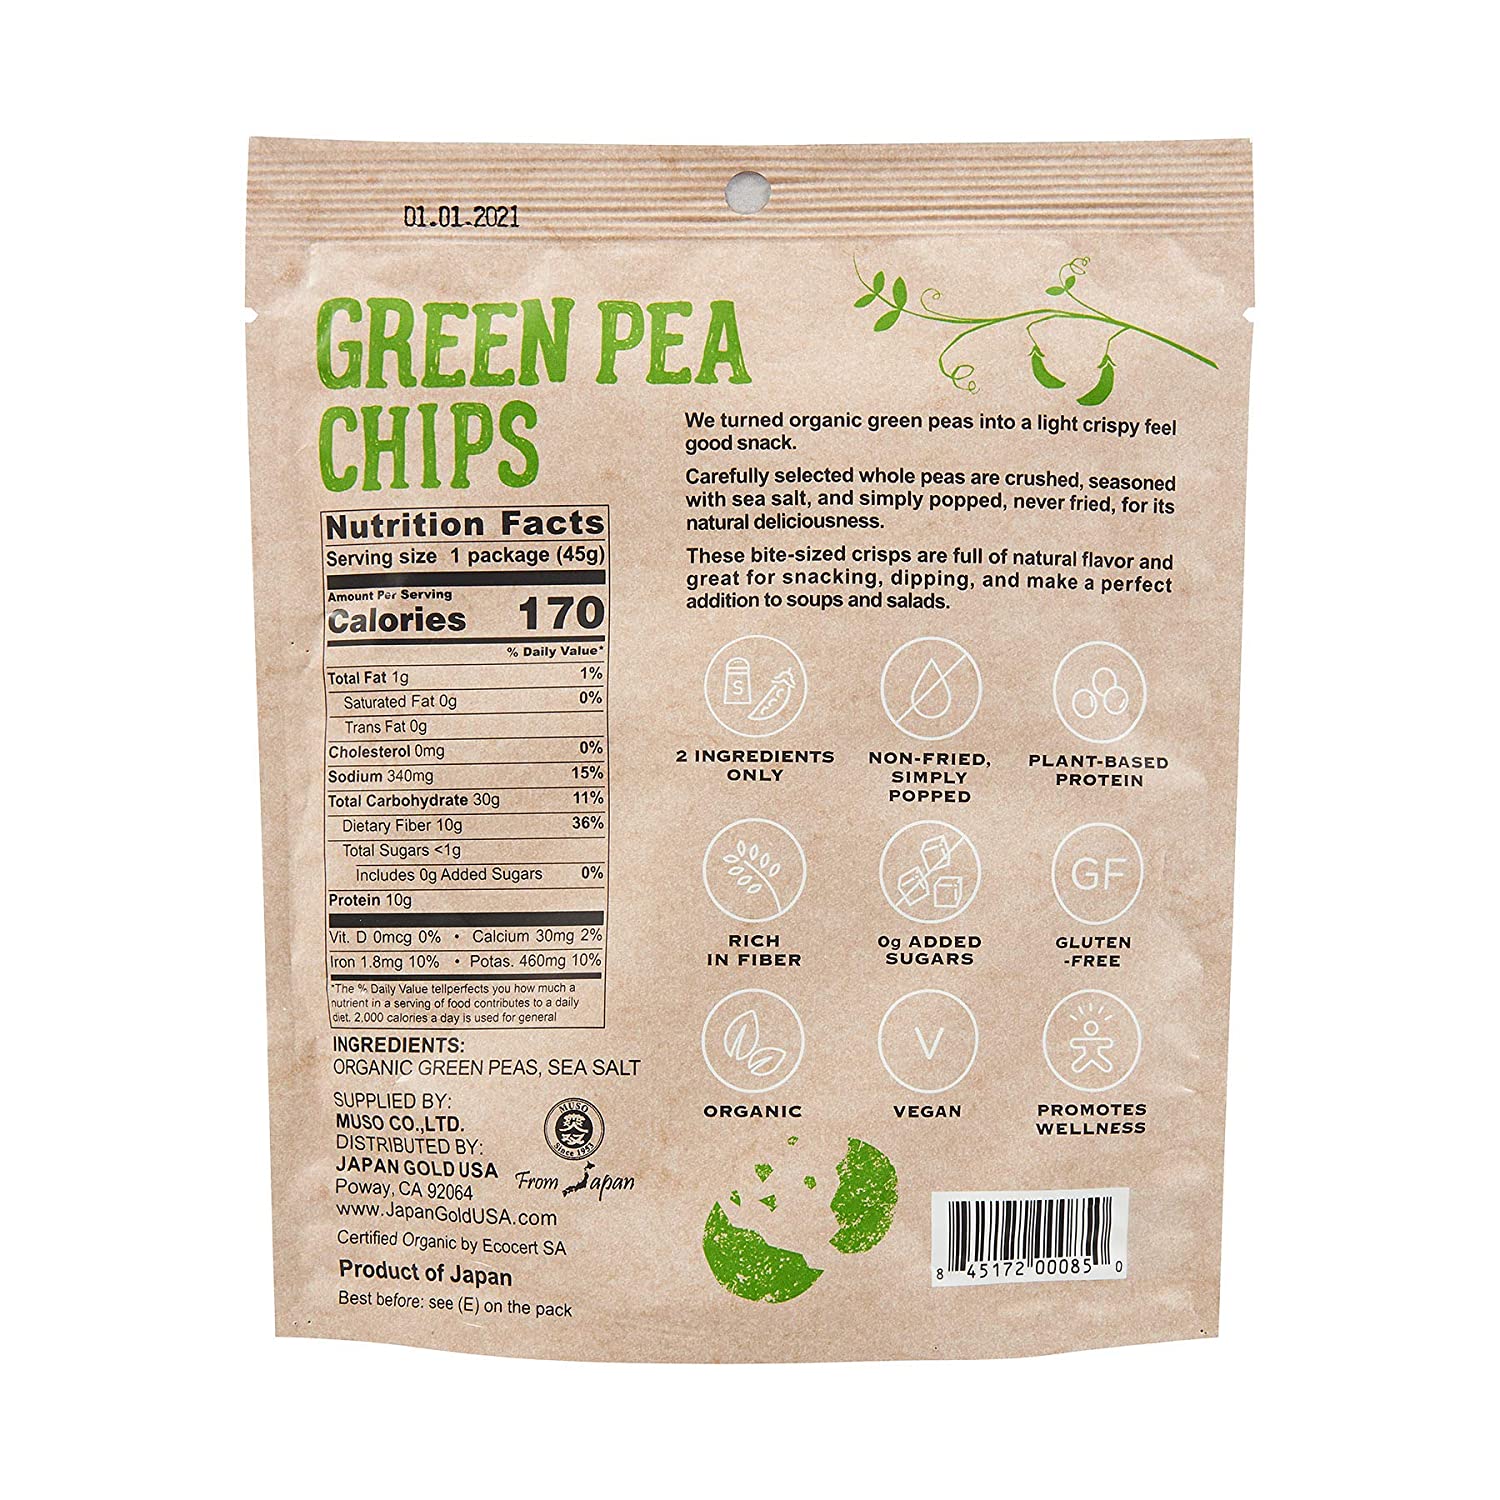 MUSO From Japan Organic Green Pea Chips, 45g, Organic, Vegan, Gluten free, Non GMO